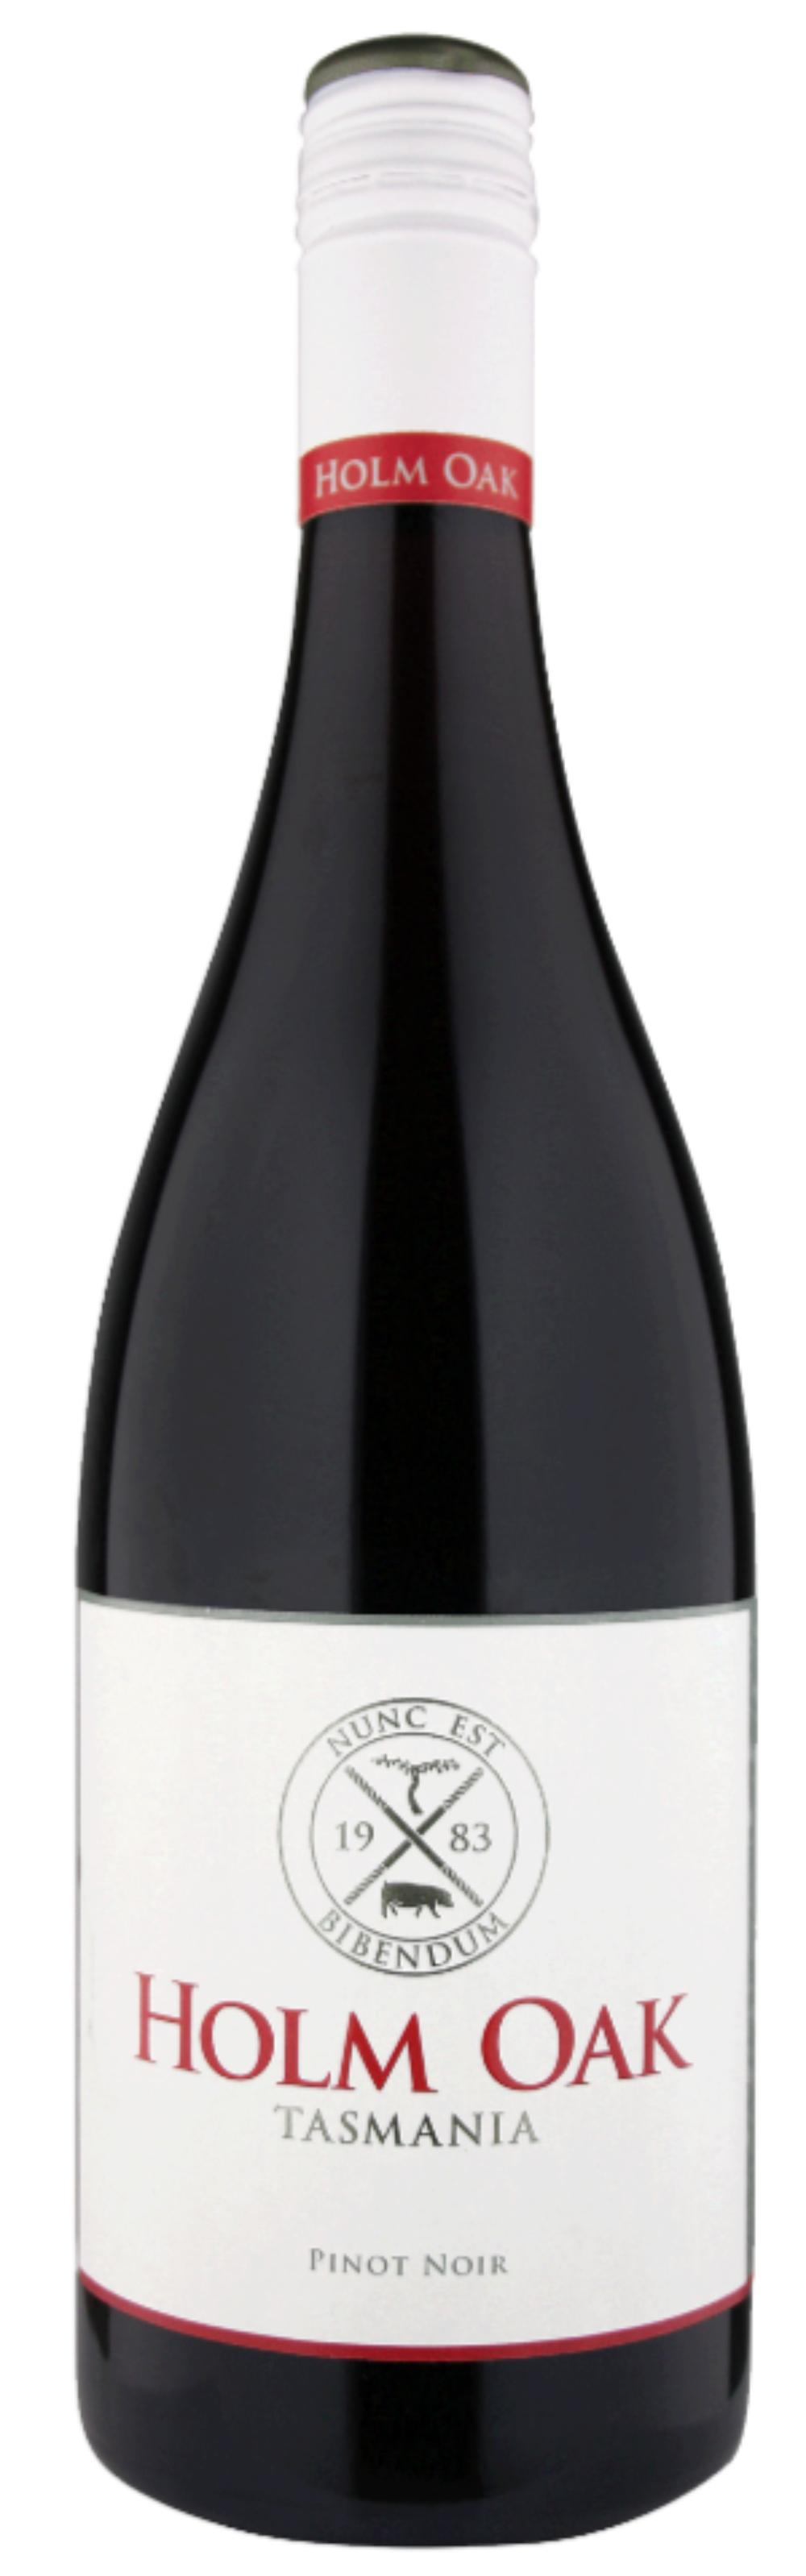 Holm Oak 2021 Pinot Noir